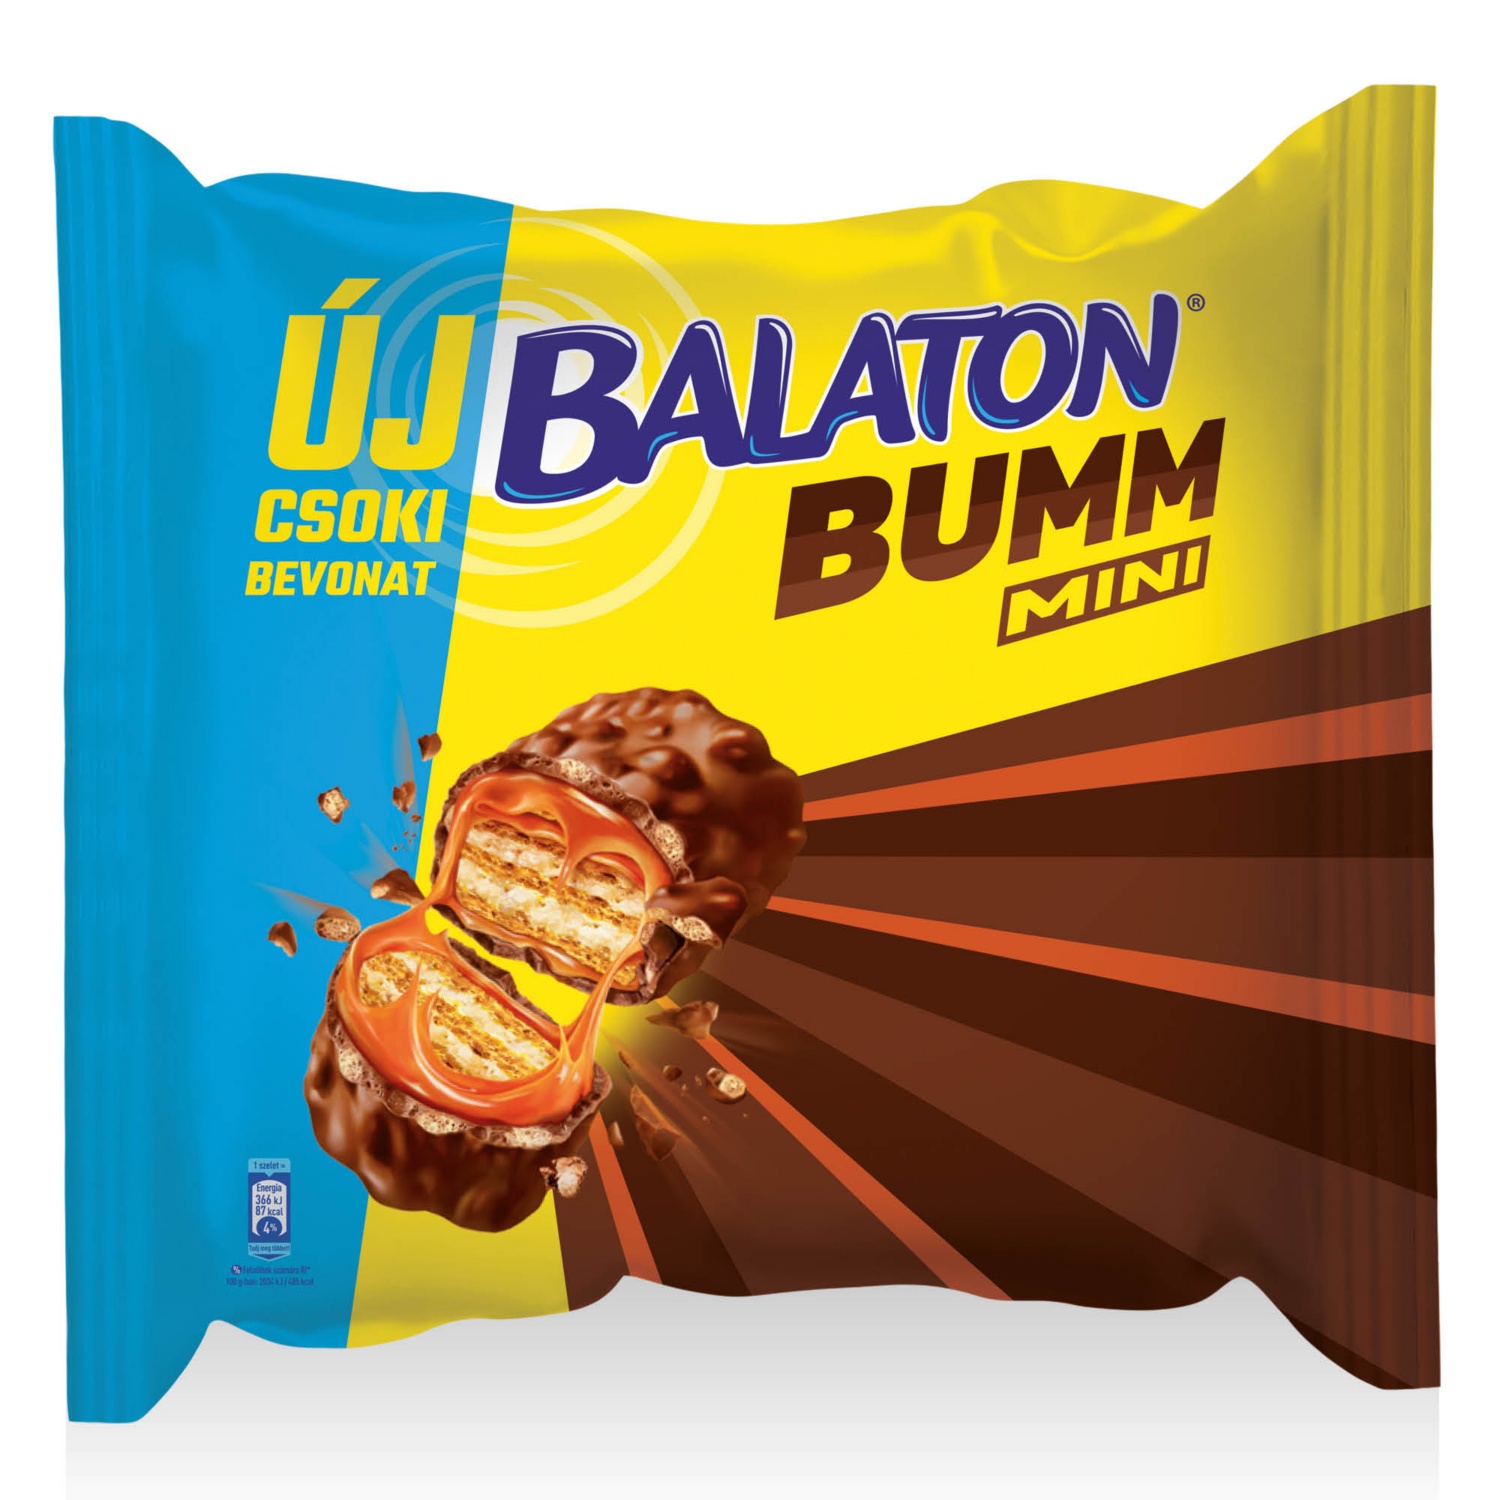 BALATON Bumm Mini, 198 g